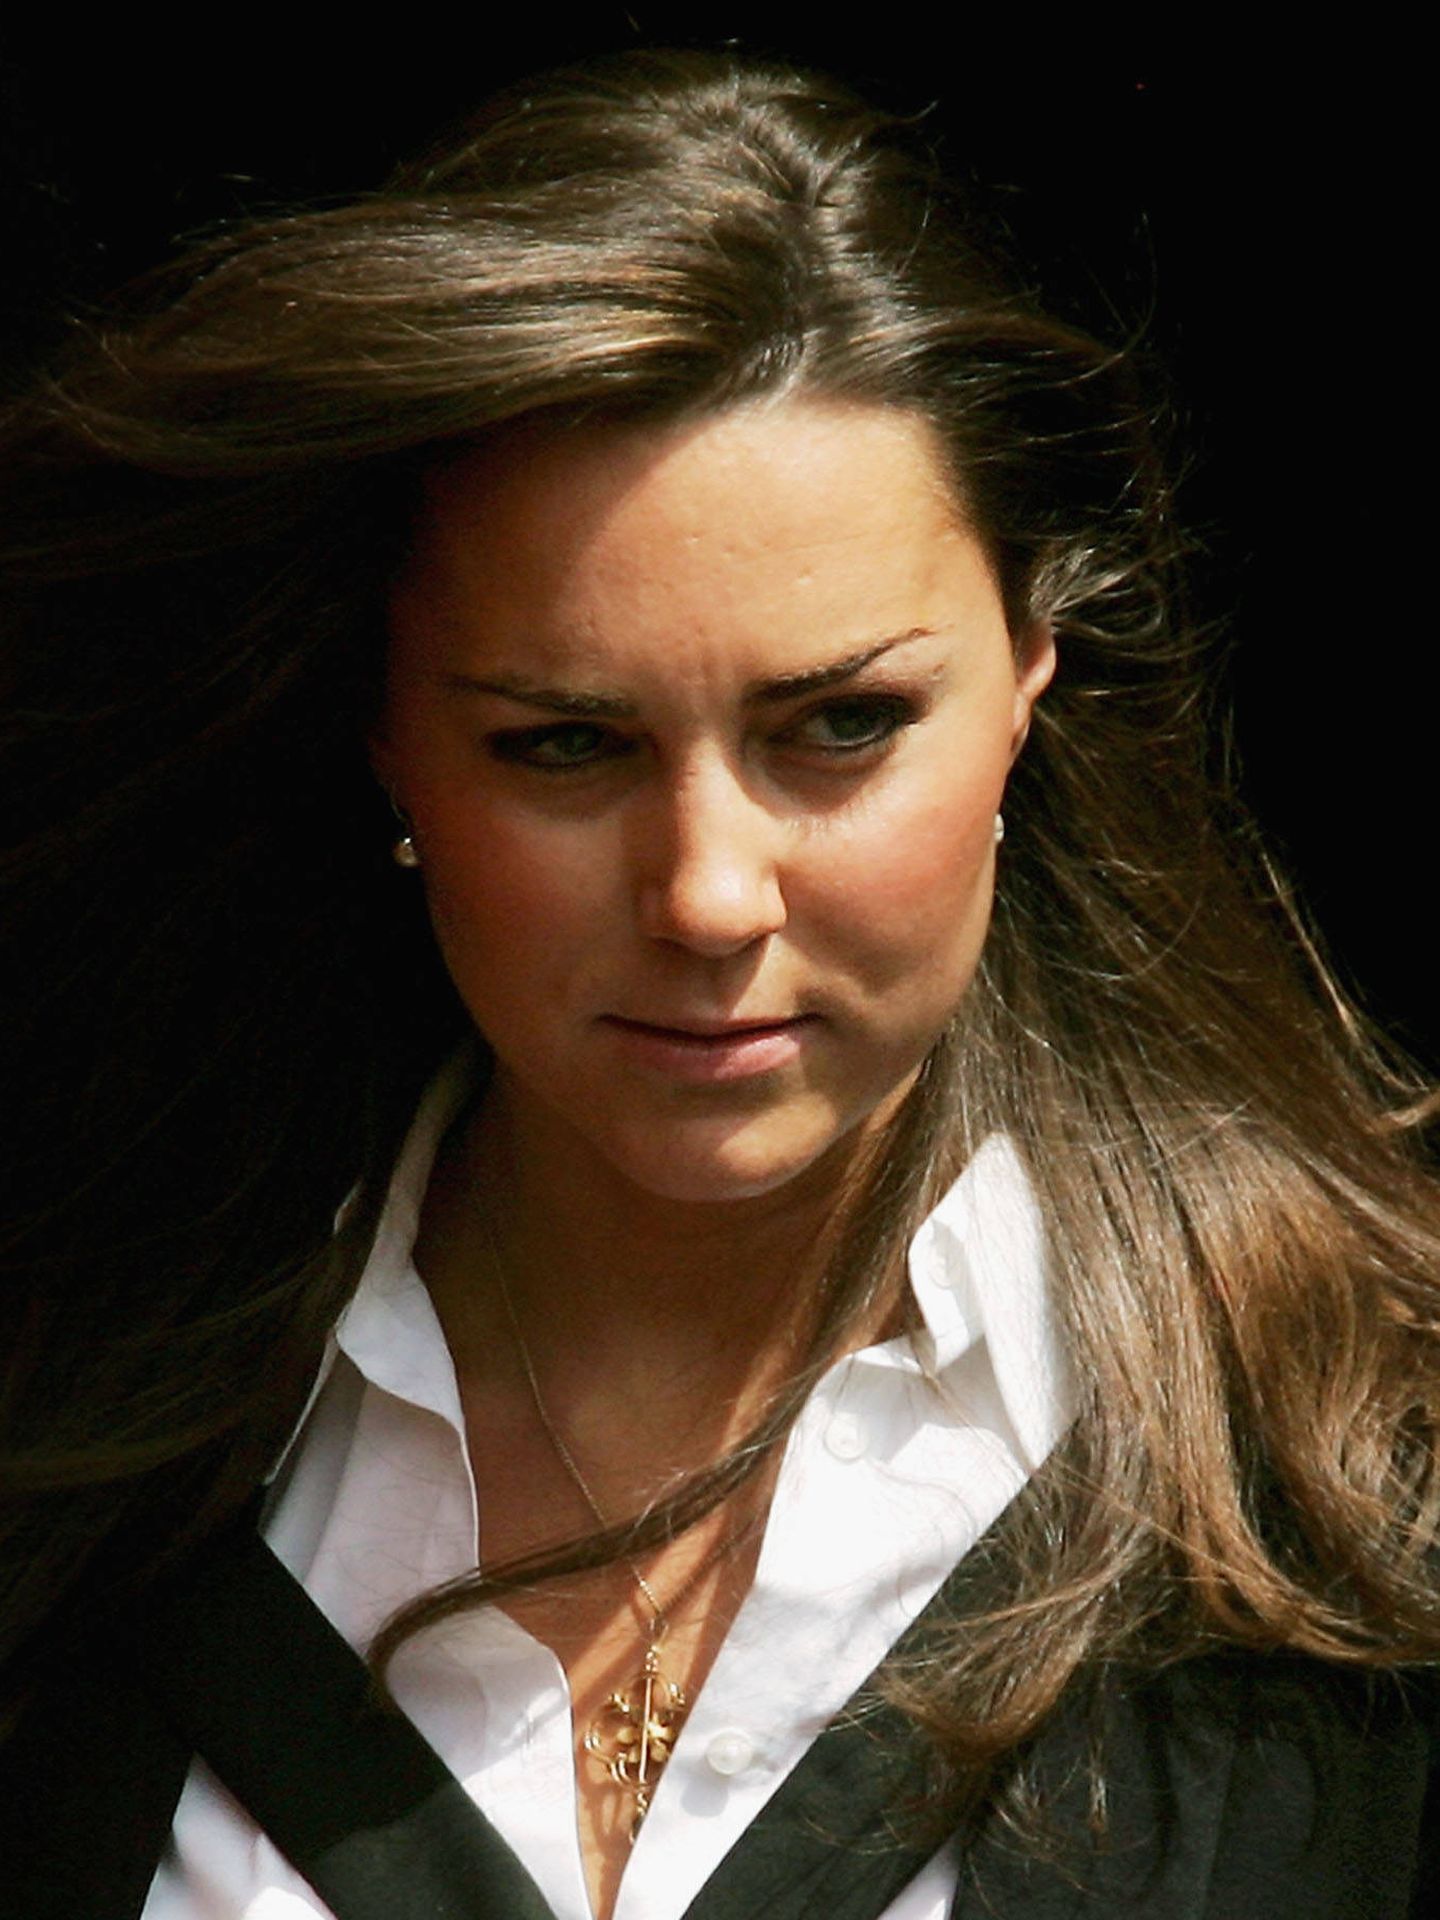 Detalle de las cejas de Kate Middleton en 2005. (Cordon Press)